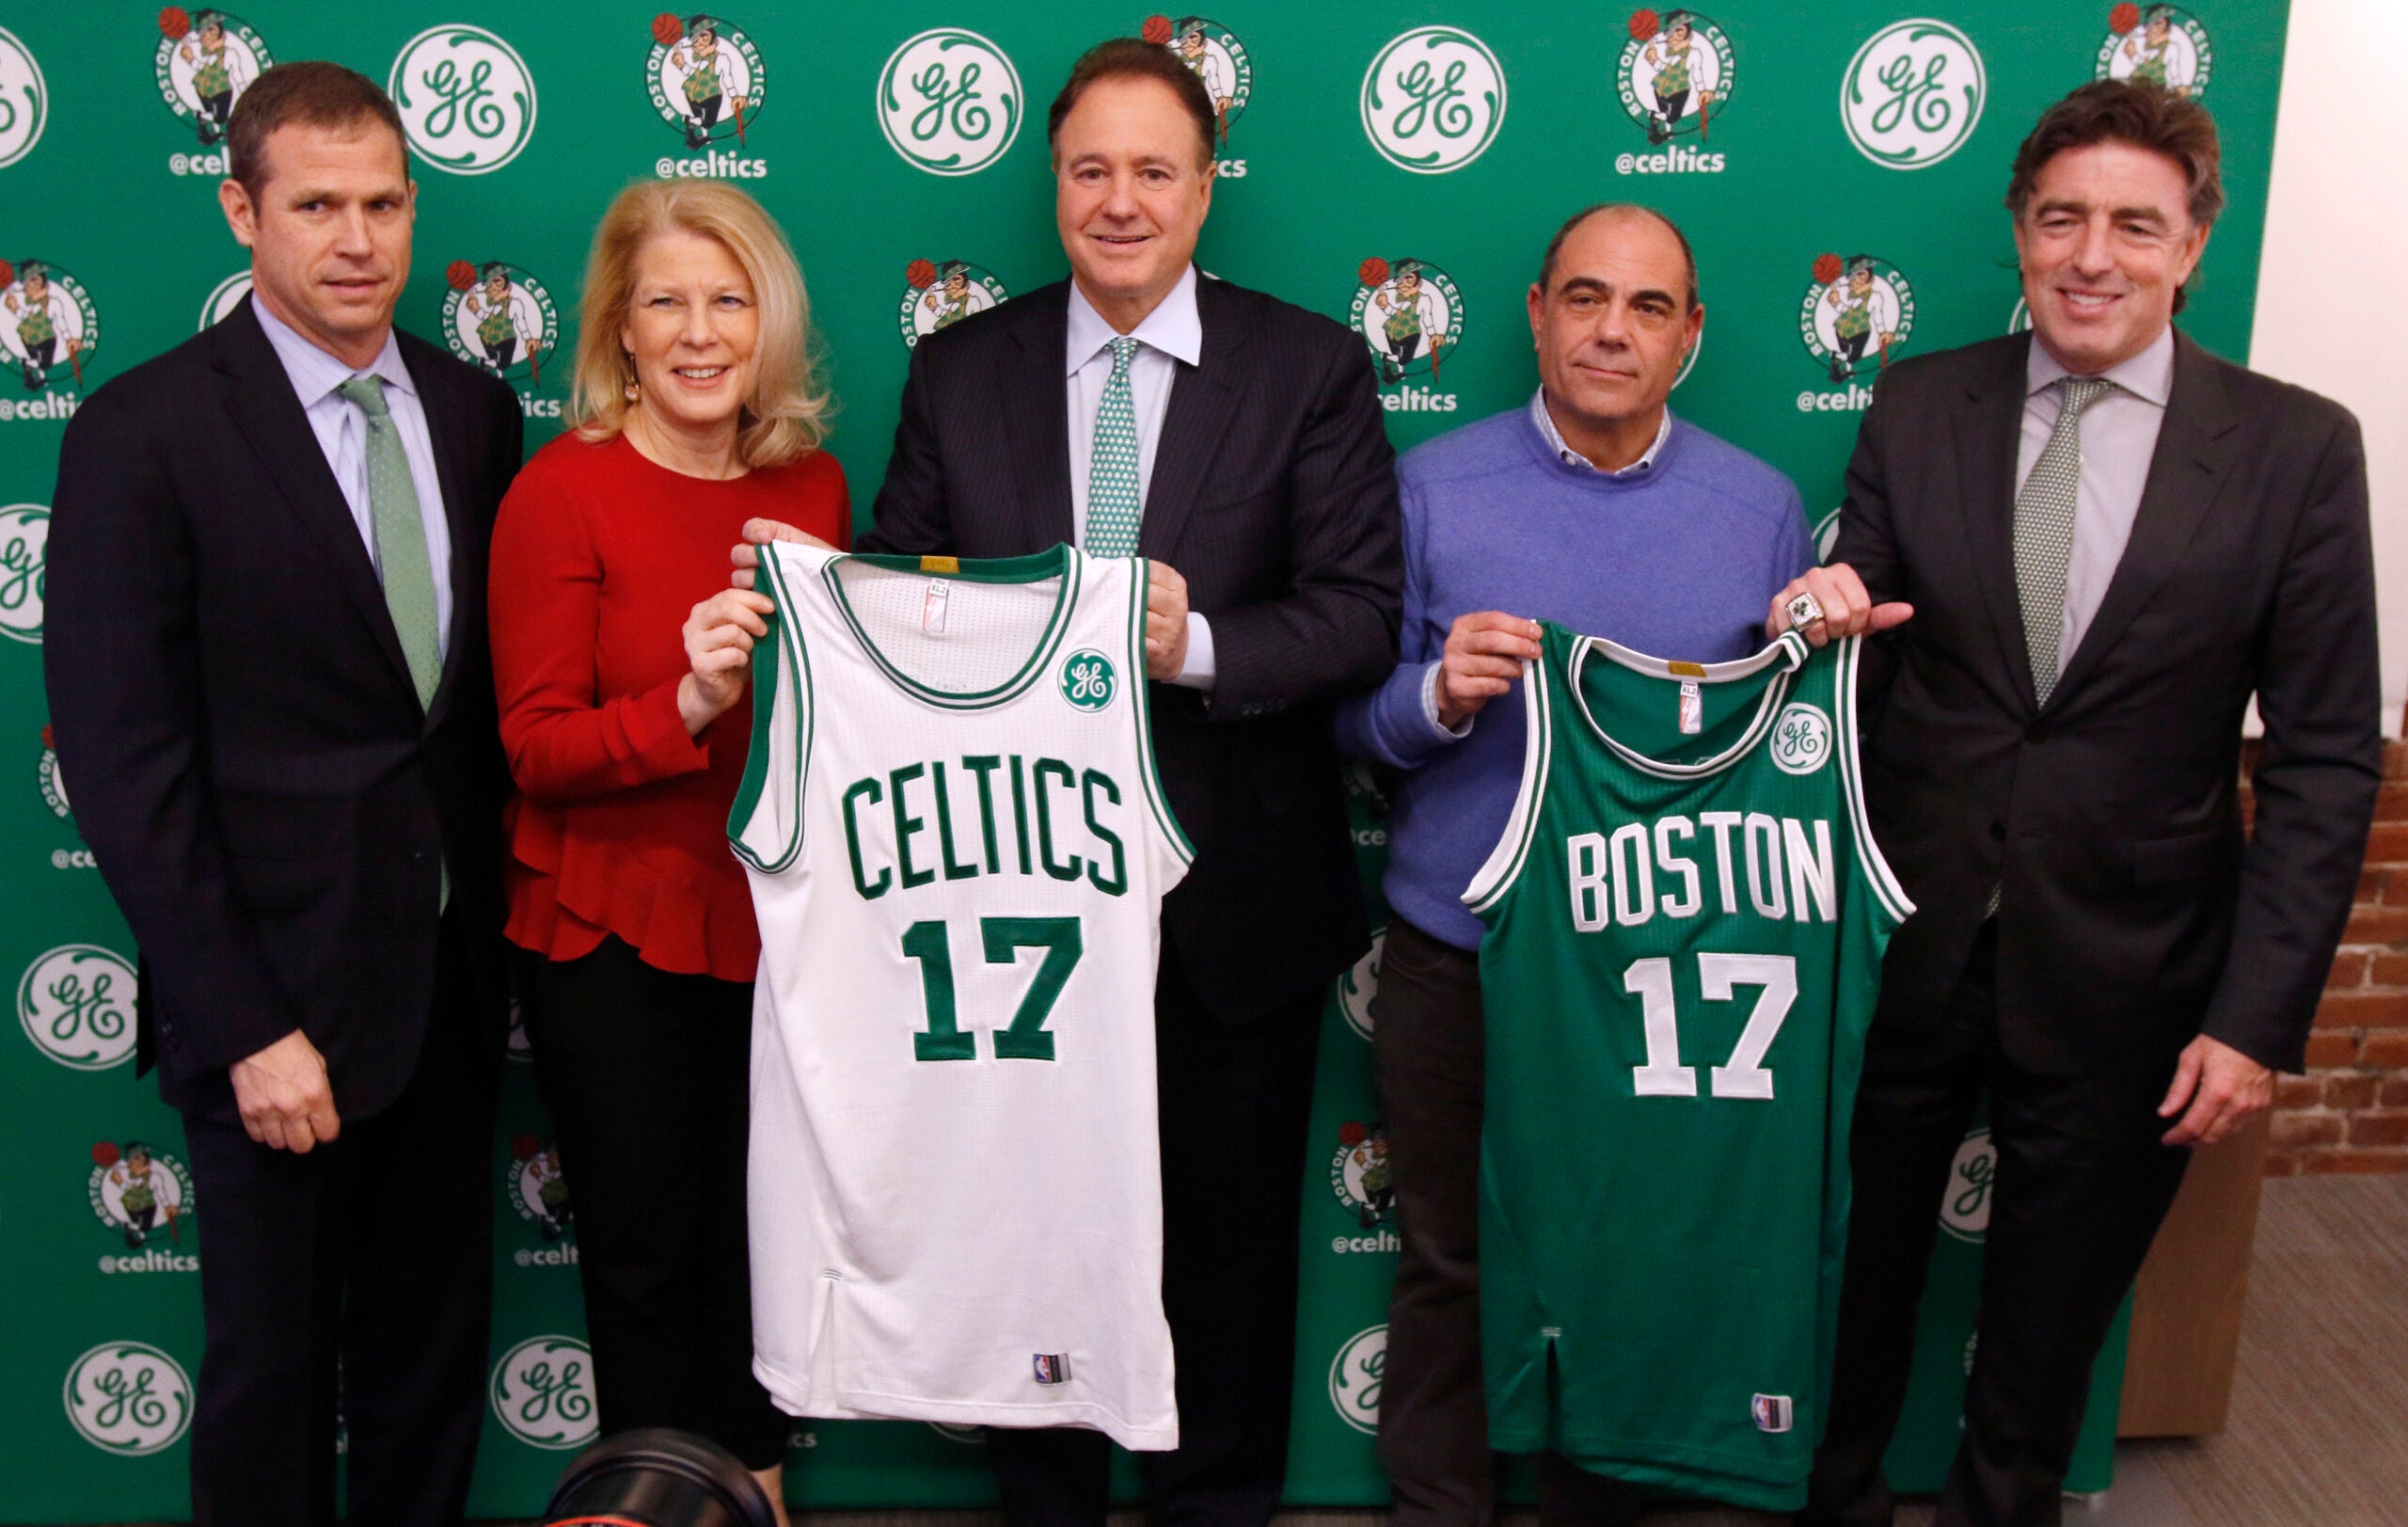 Celtics, GE announce jersey sponsorship deal - Front Office Sports